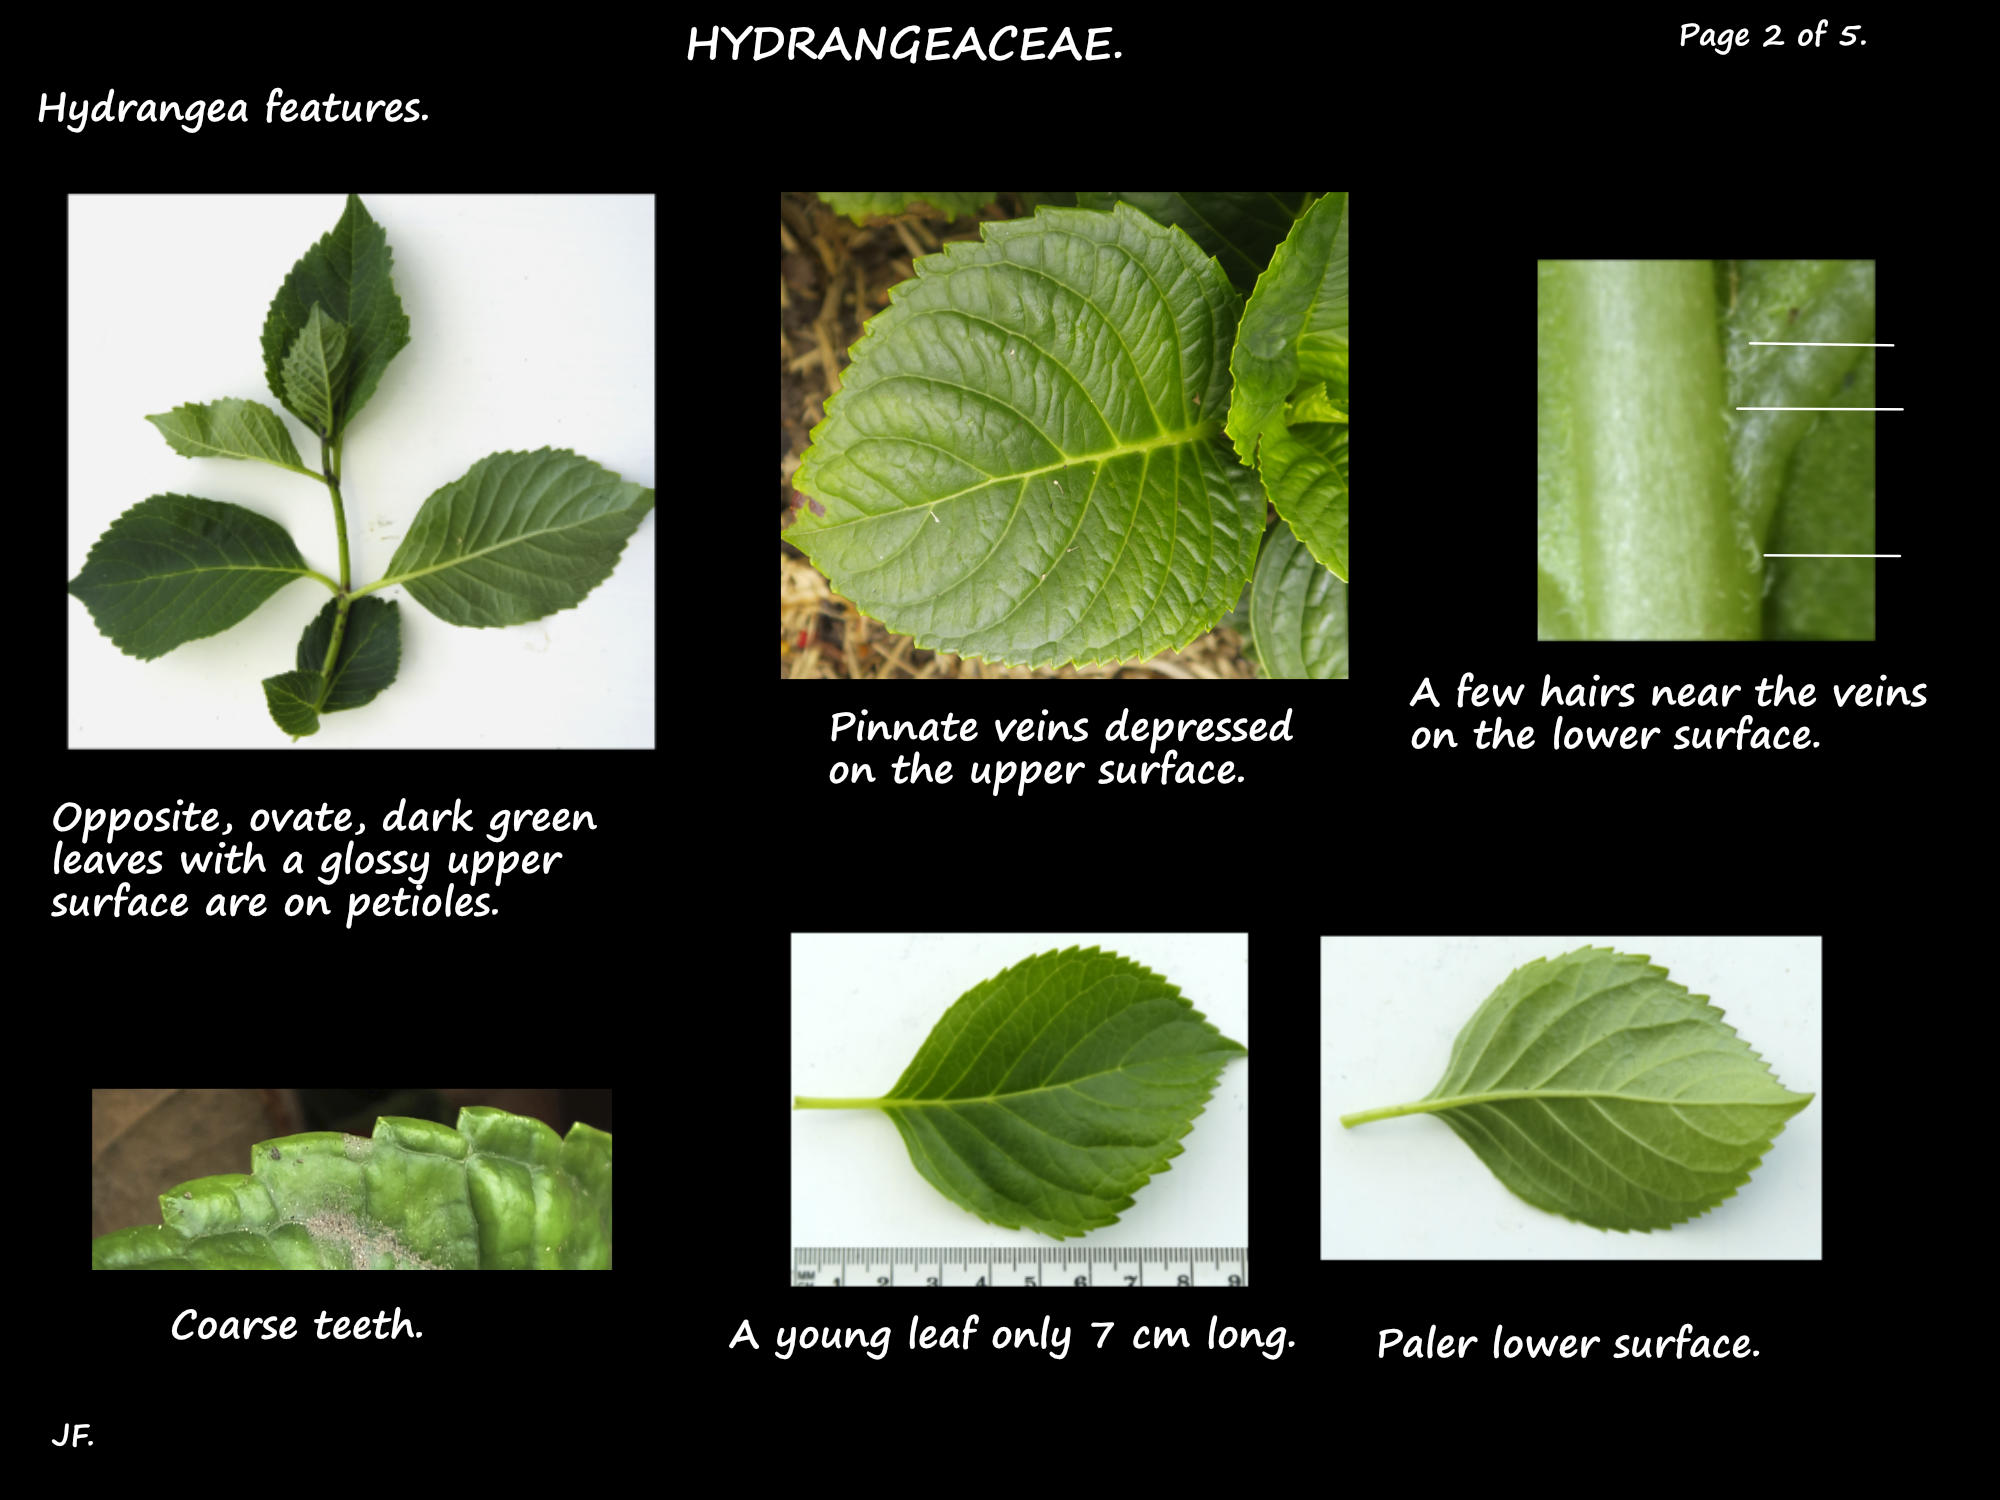 2 Hydrangea leaves